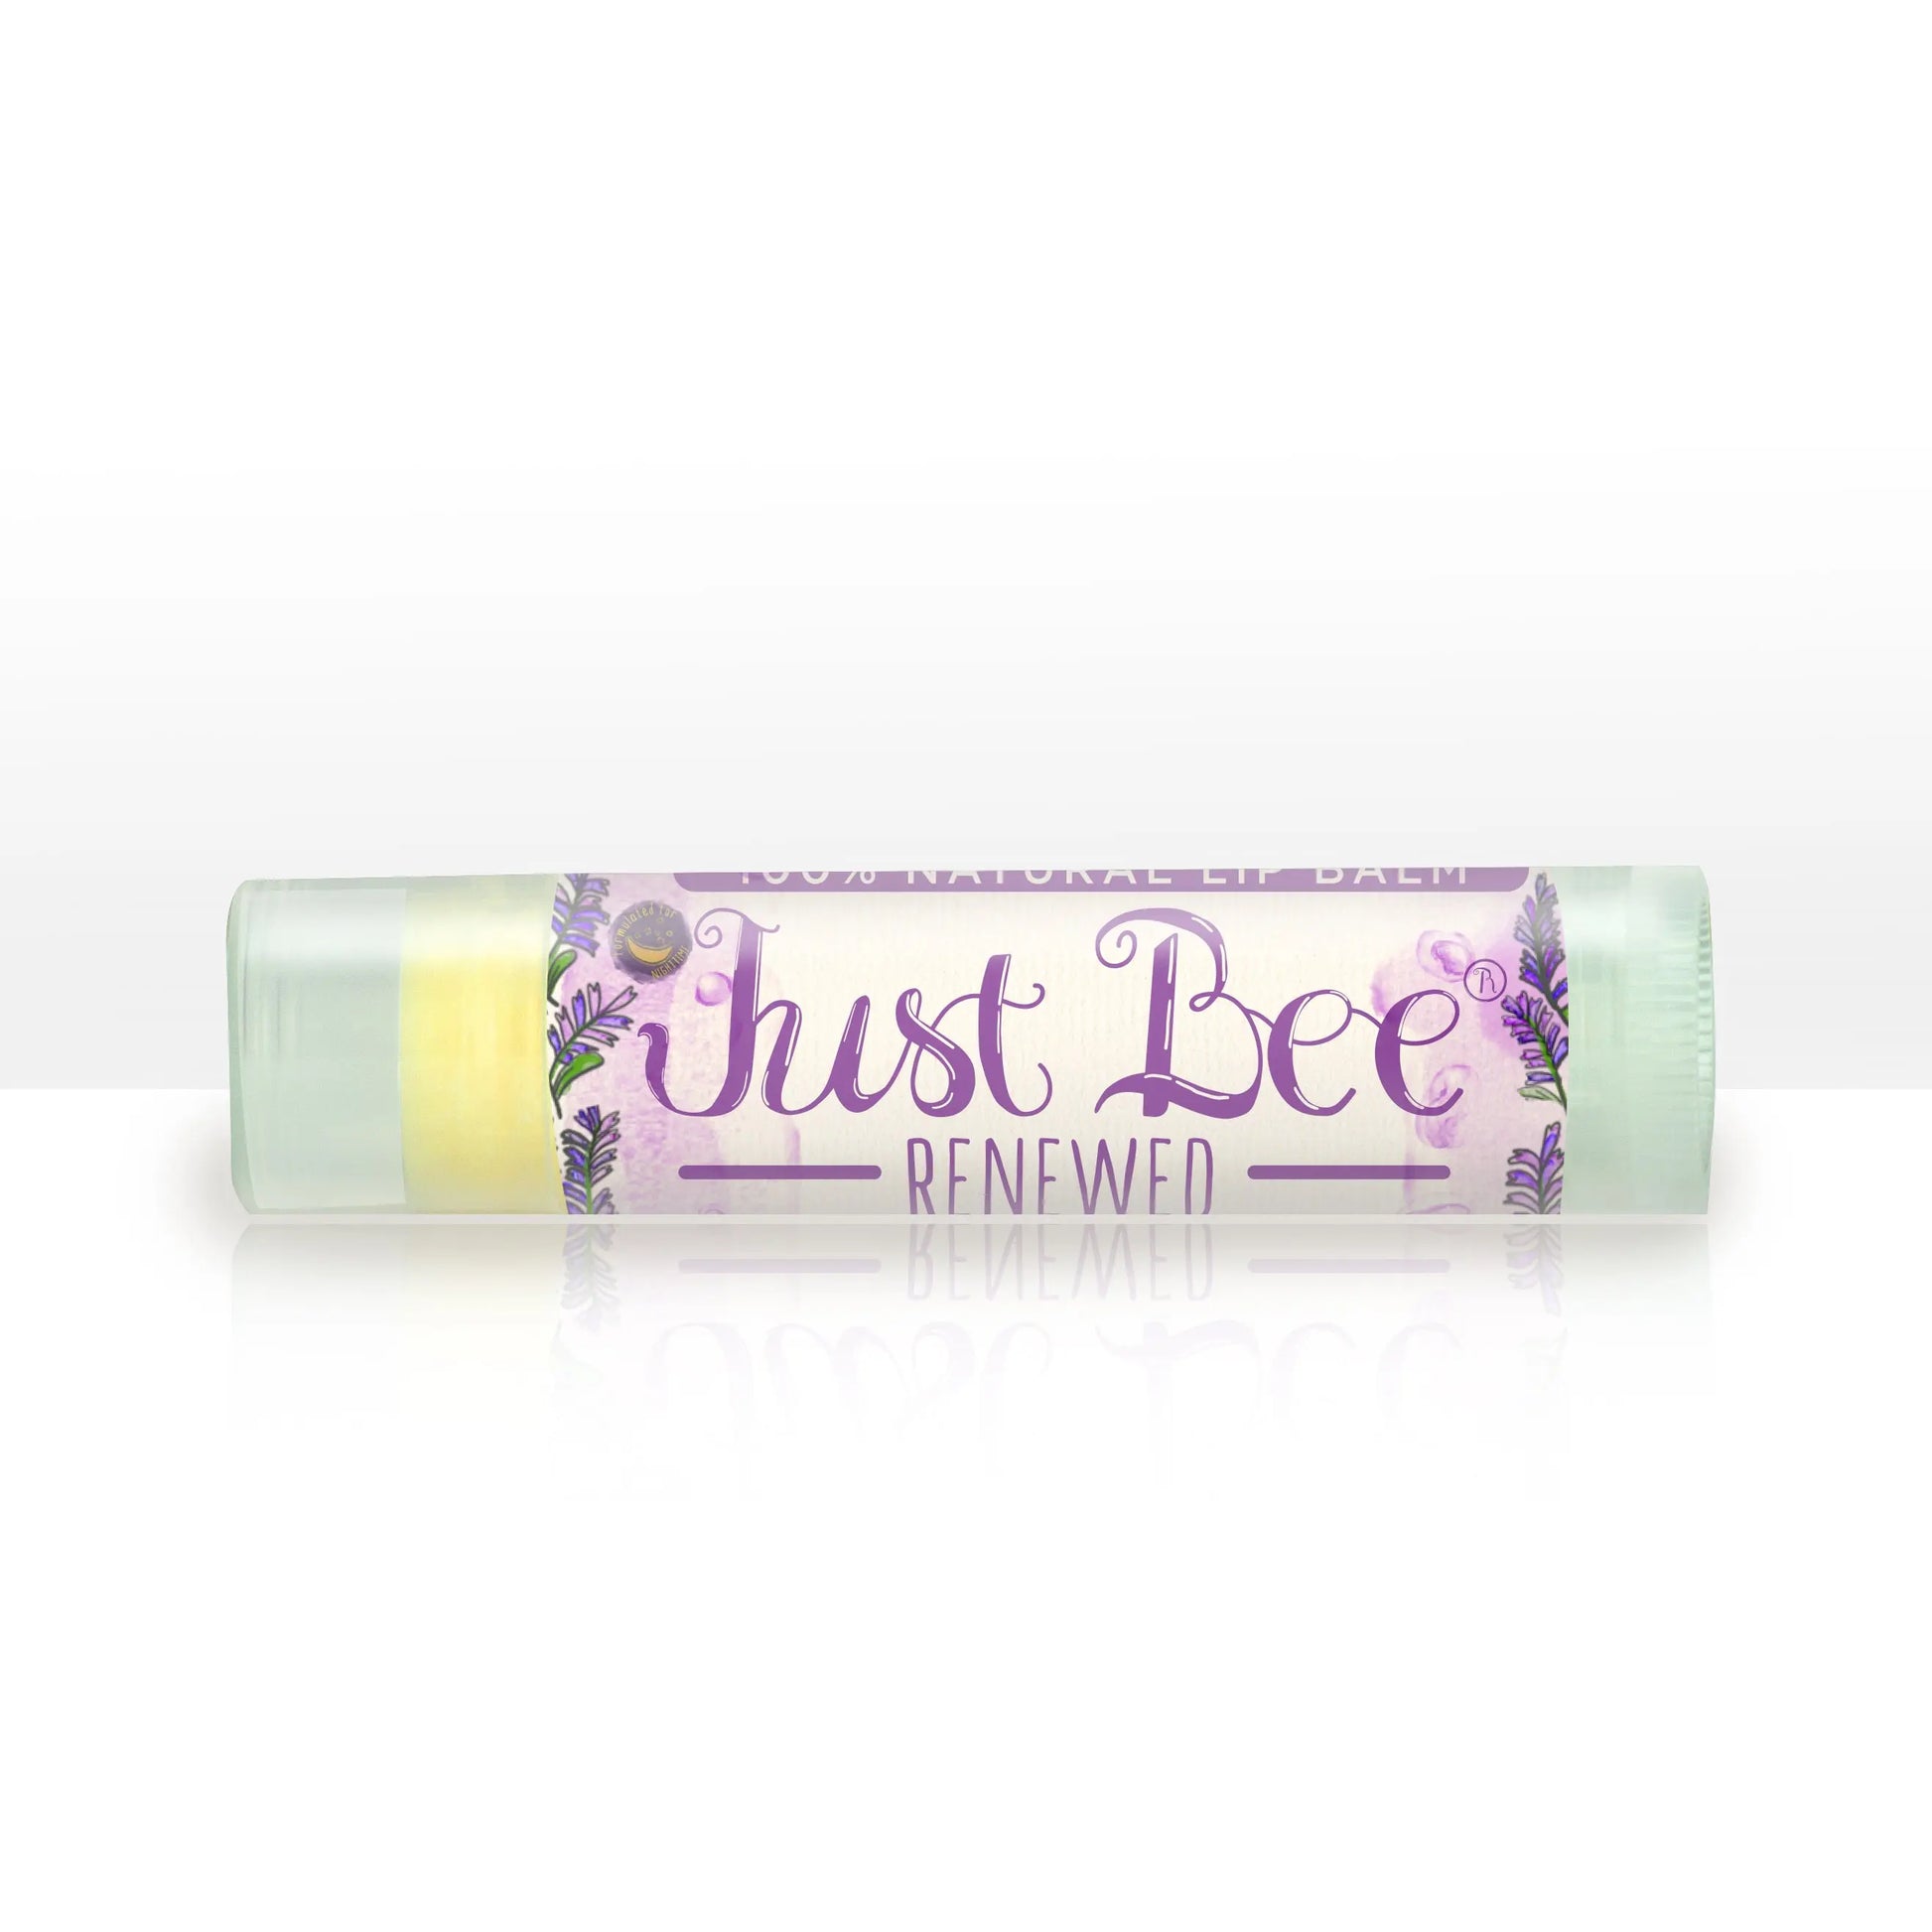 Just Bee Renewed – Just Bee Cosmetics